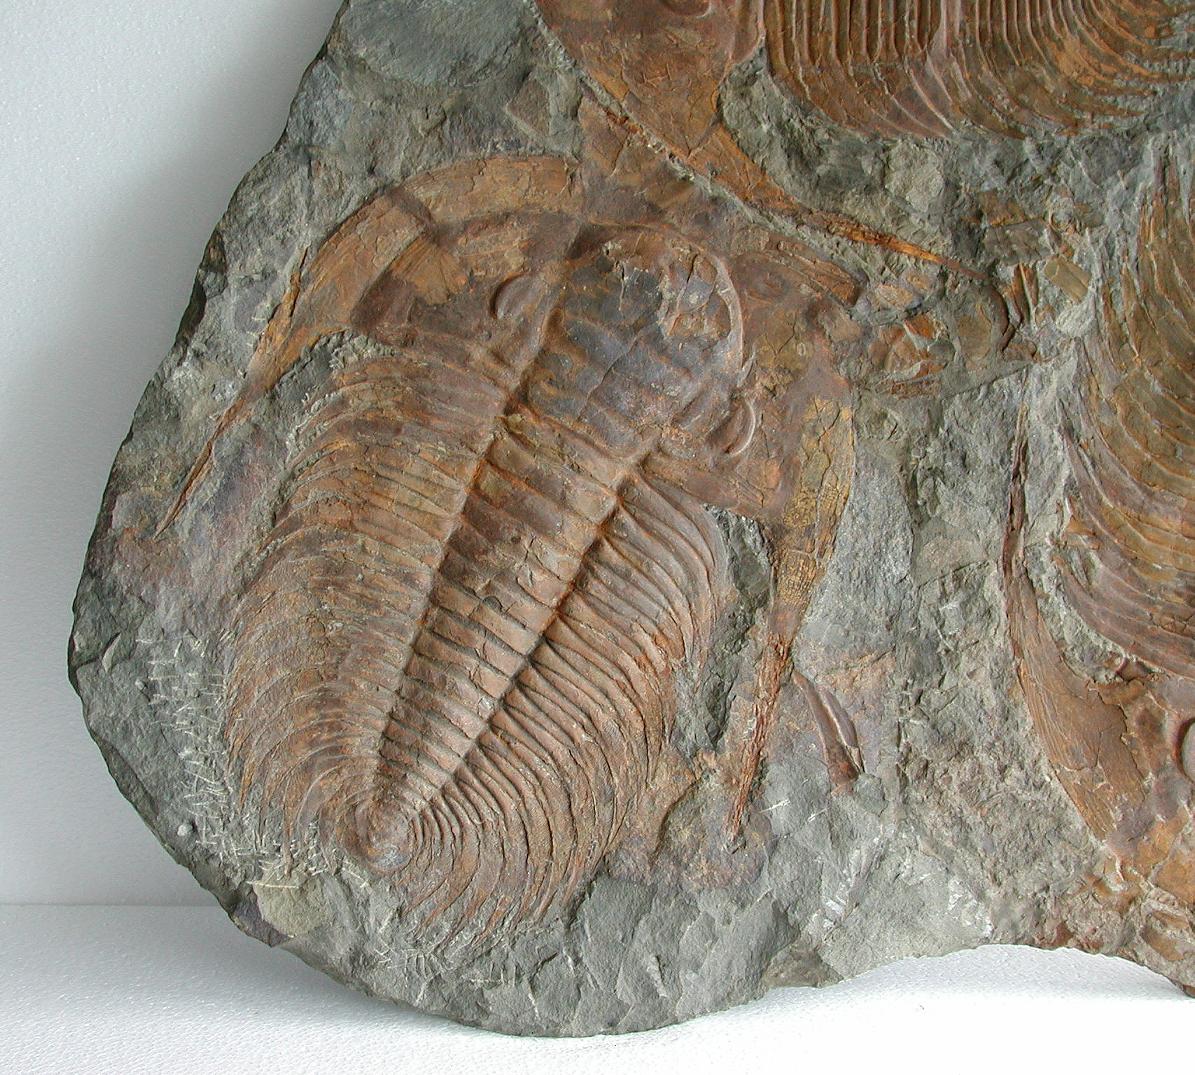 A Large Multiple Paradoxides Trilobite Fossil Plaque (Ex. Christie's) - Image 3 of 9